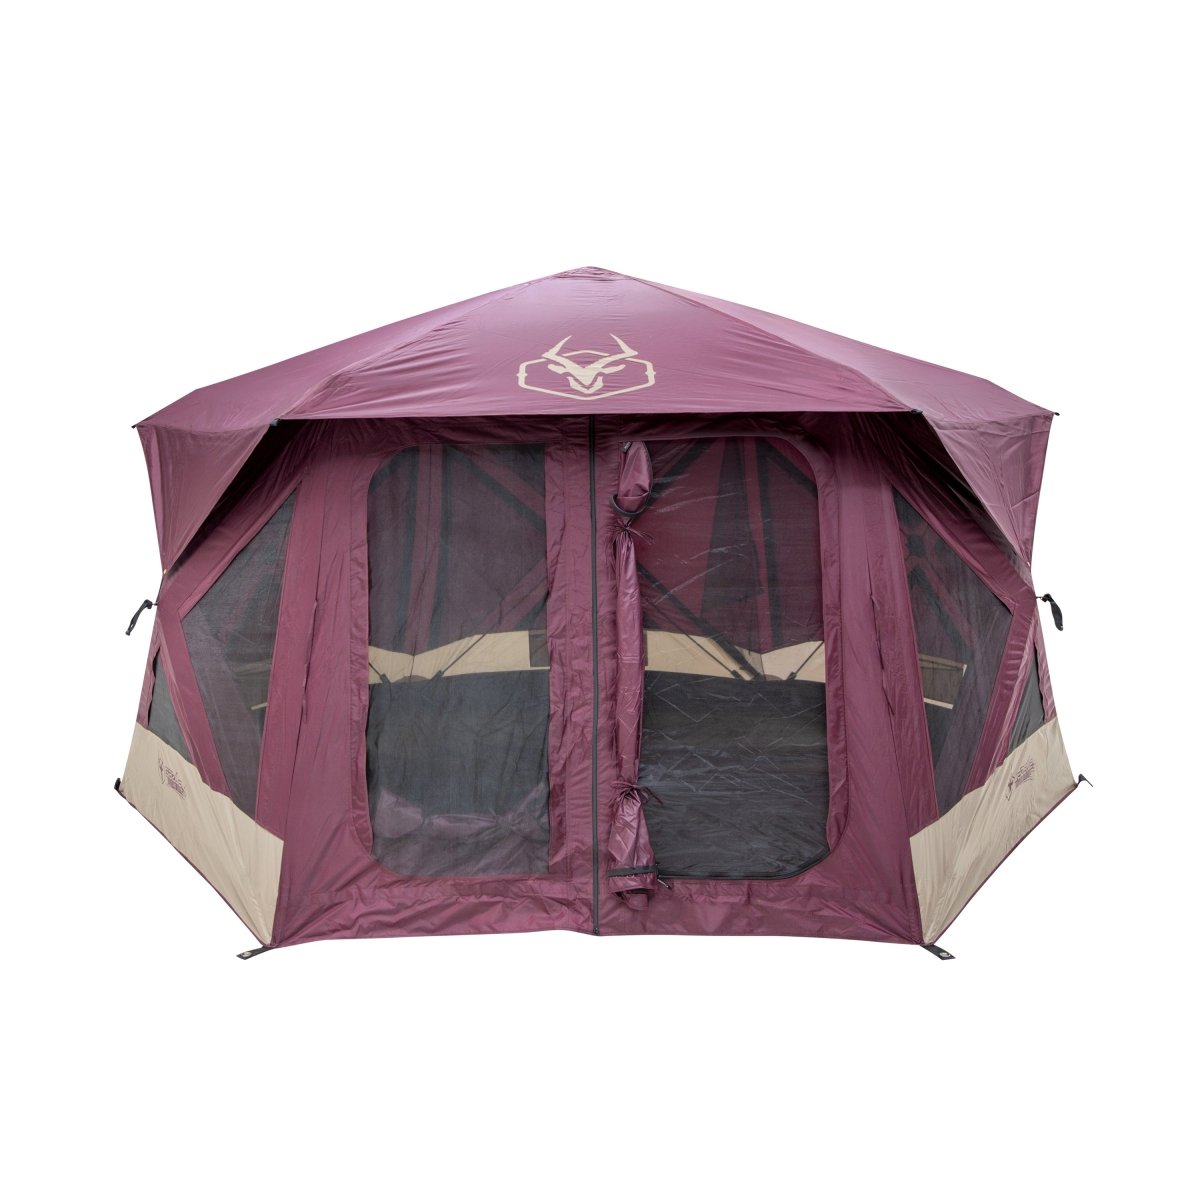 T-Hex Hub Tent Overland Edition - Overland Bound